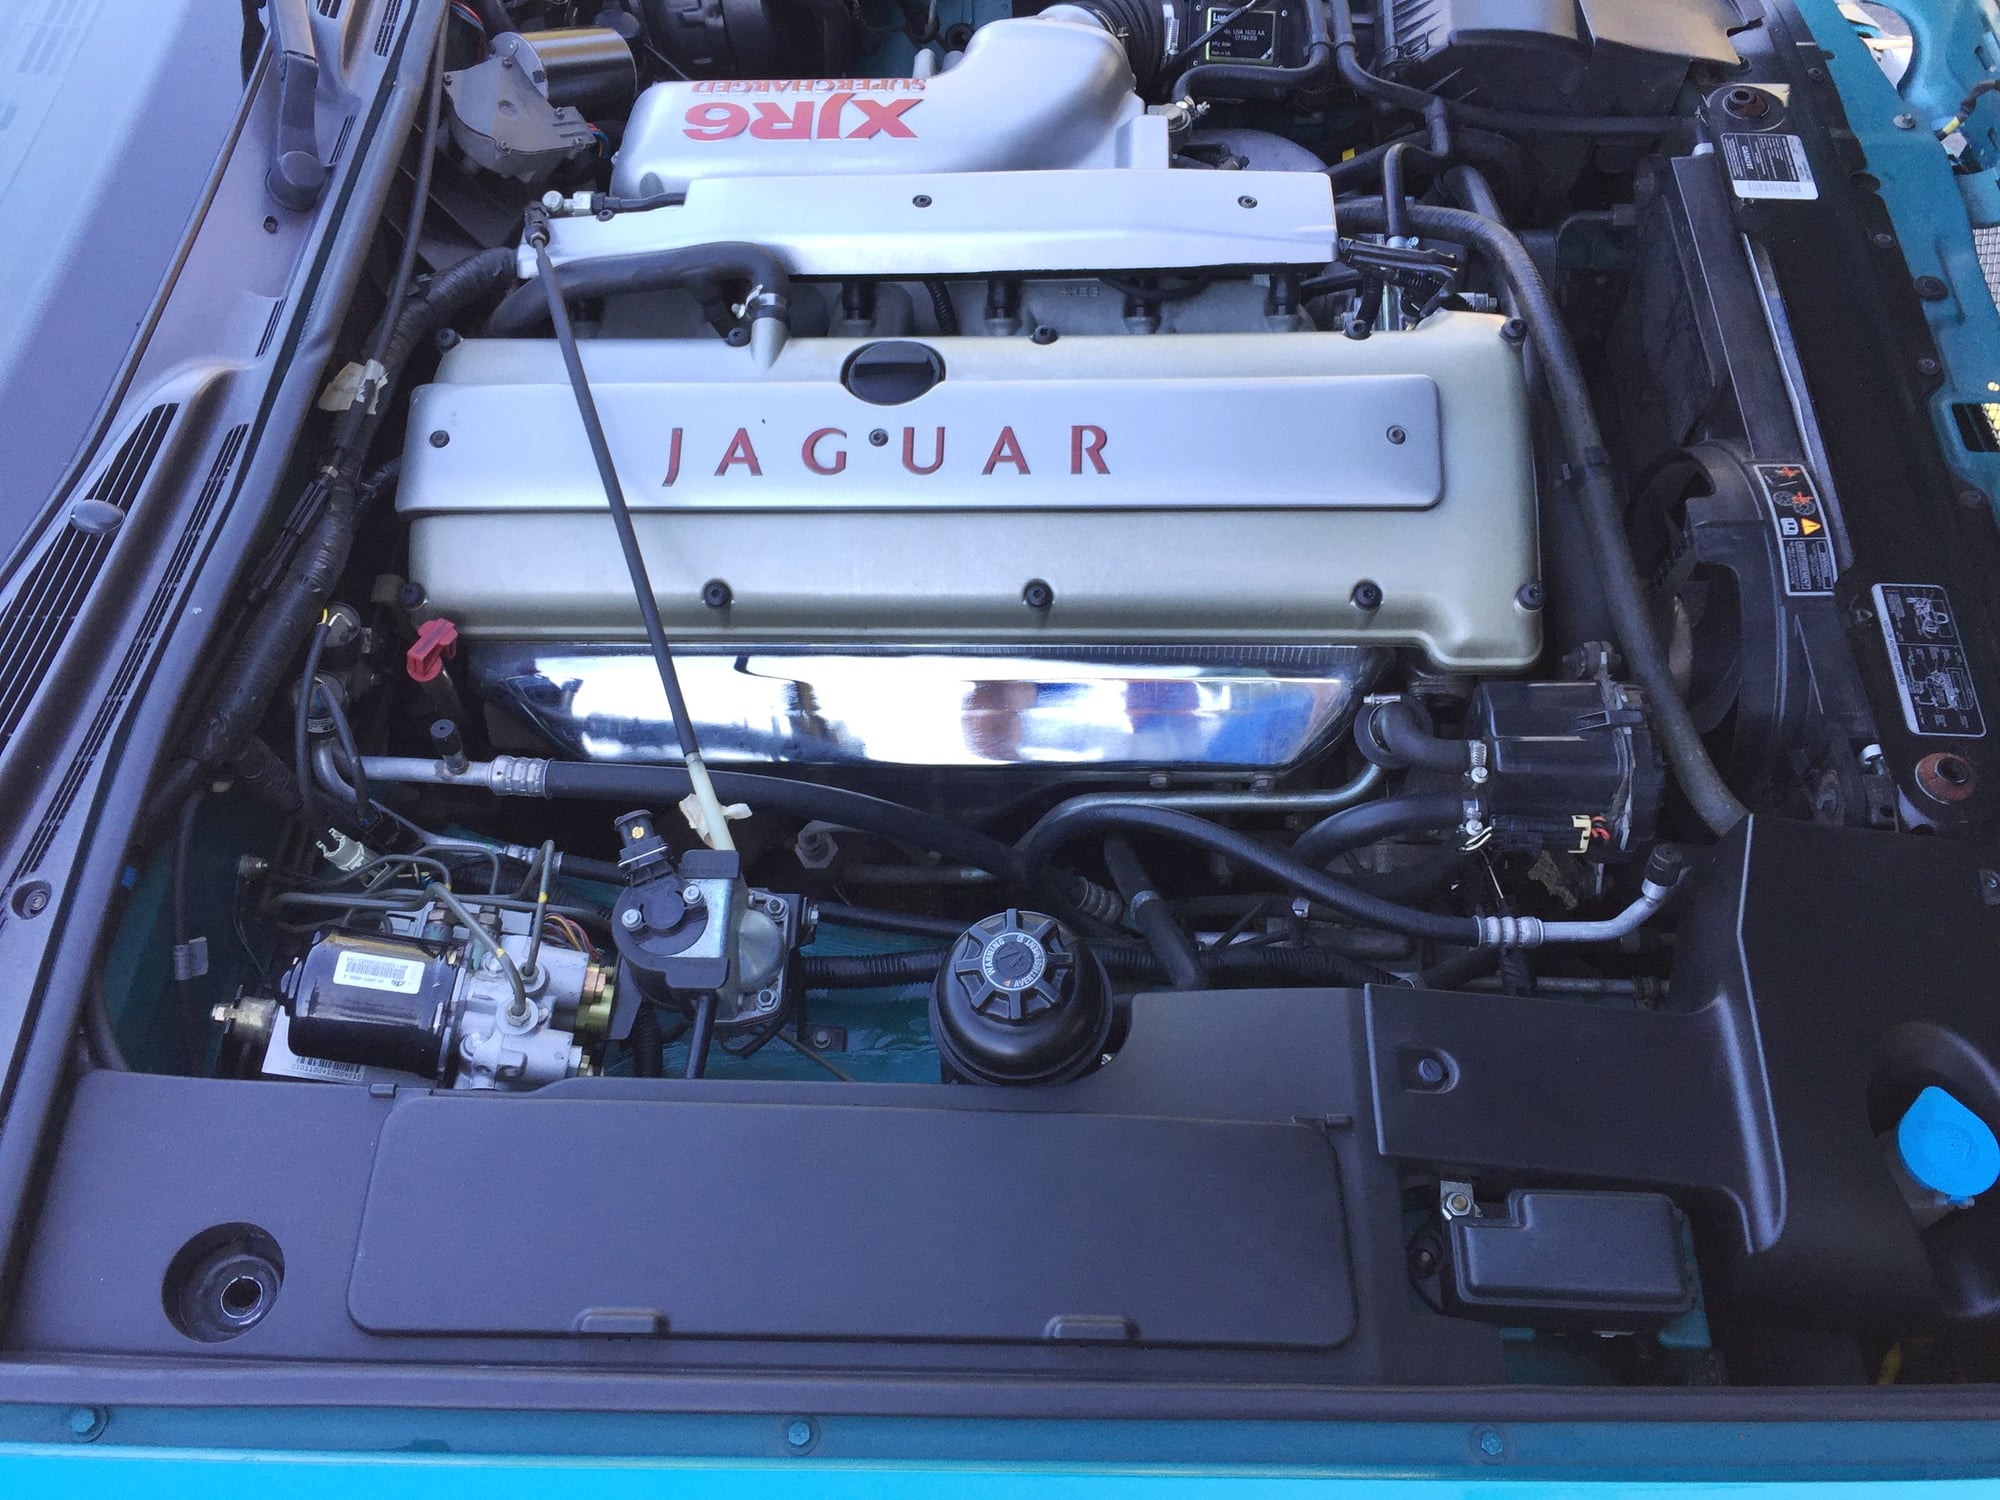 1995 Jaguar XJR - 1995 Jaguar XJR supercharged - Used - VIN SAJPX1143SC728030 - 67,000 Miles - 6 cyl - 2WD - Automatic - Sedan - Blue - Los Angeles, CA 91304, United States